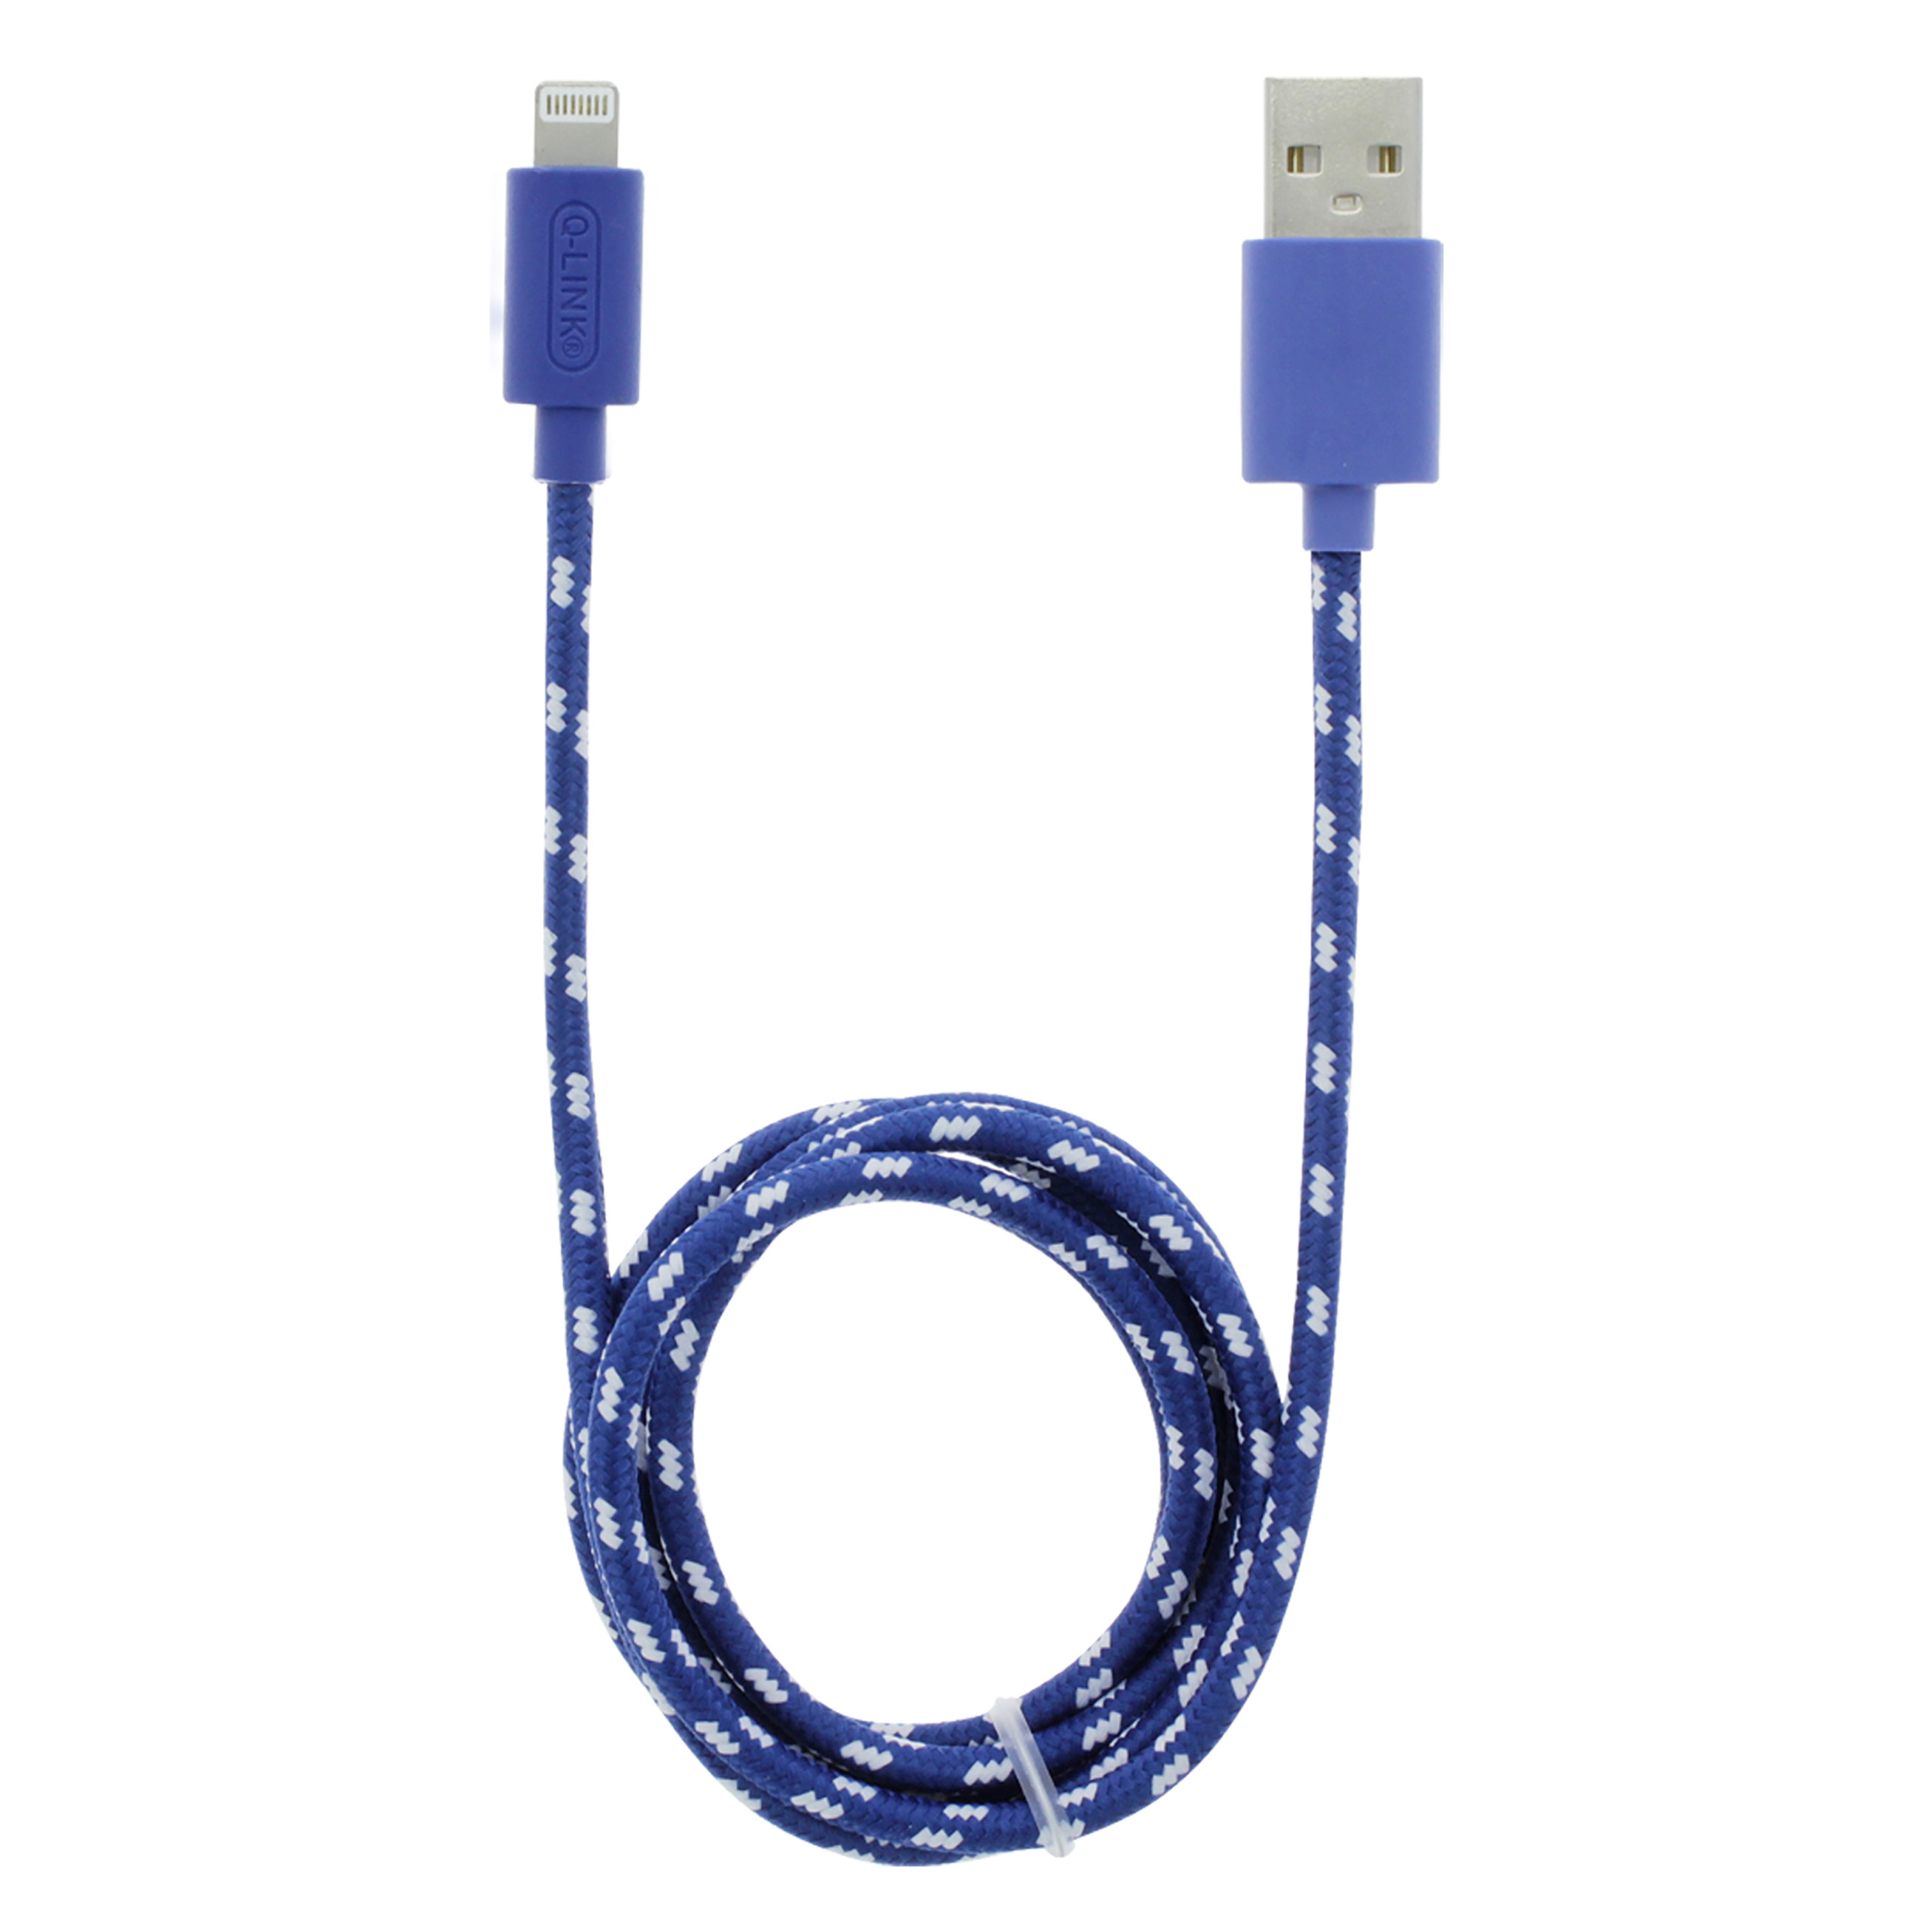 00.137.12 Q-Link  datakabel USB - iPhone - 1 m - blauw/wit